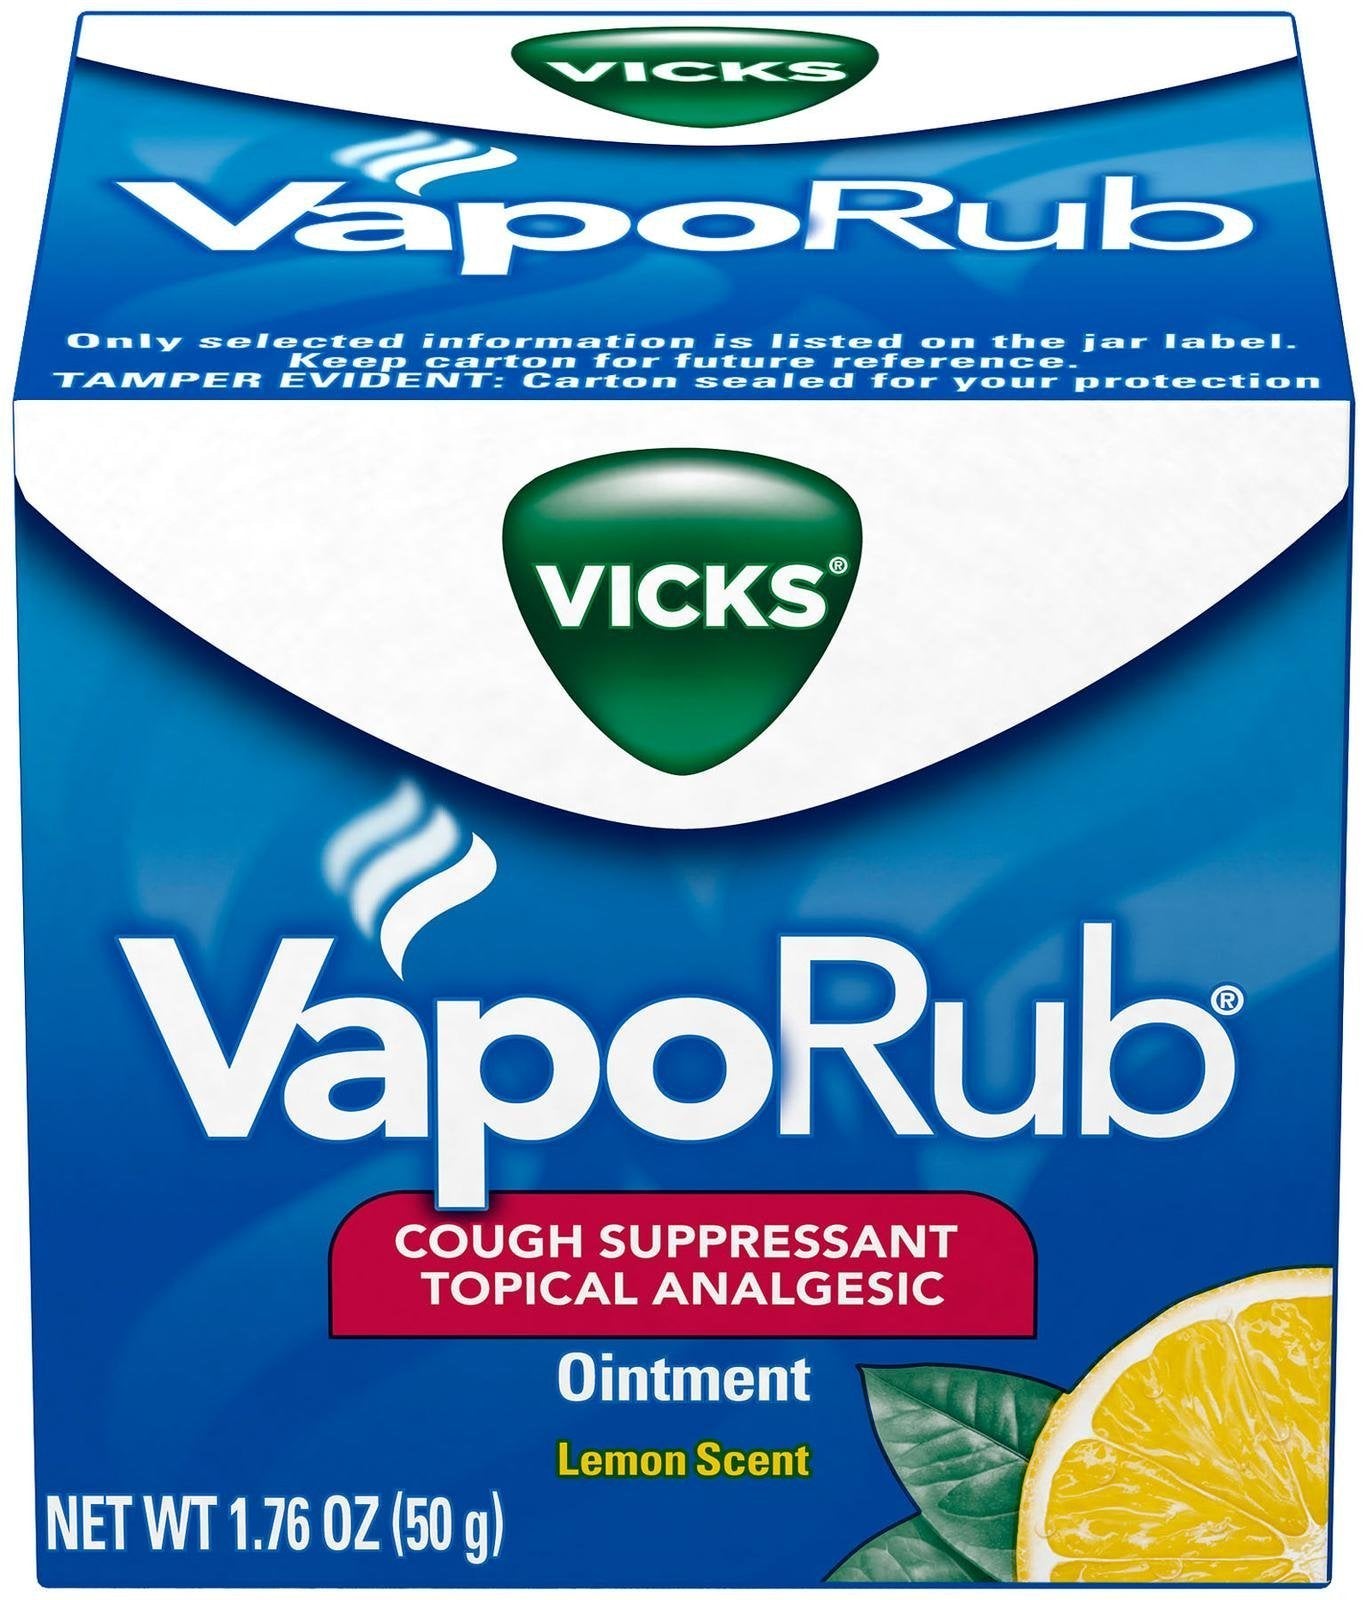 Vicks VapoRub Topical Cough Suppressant Ointment - 1.76 oz